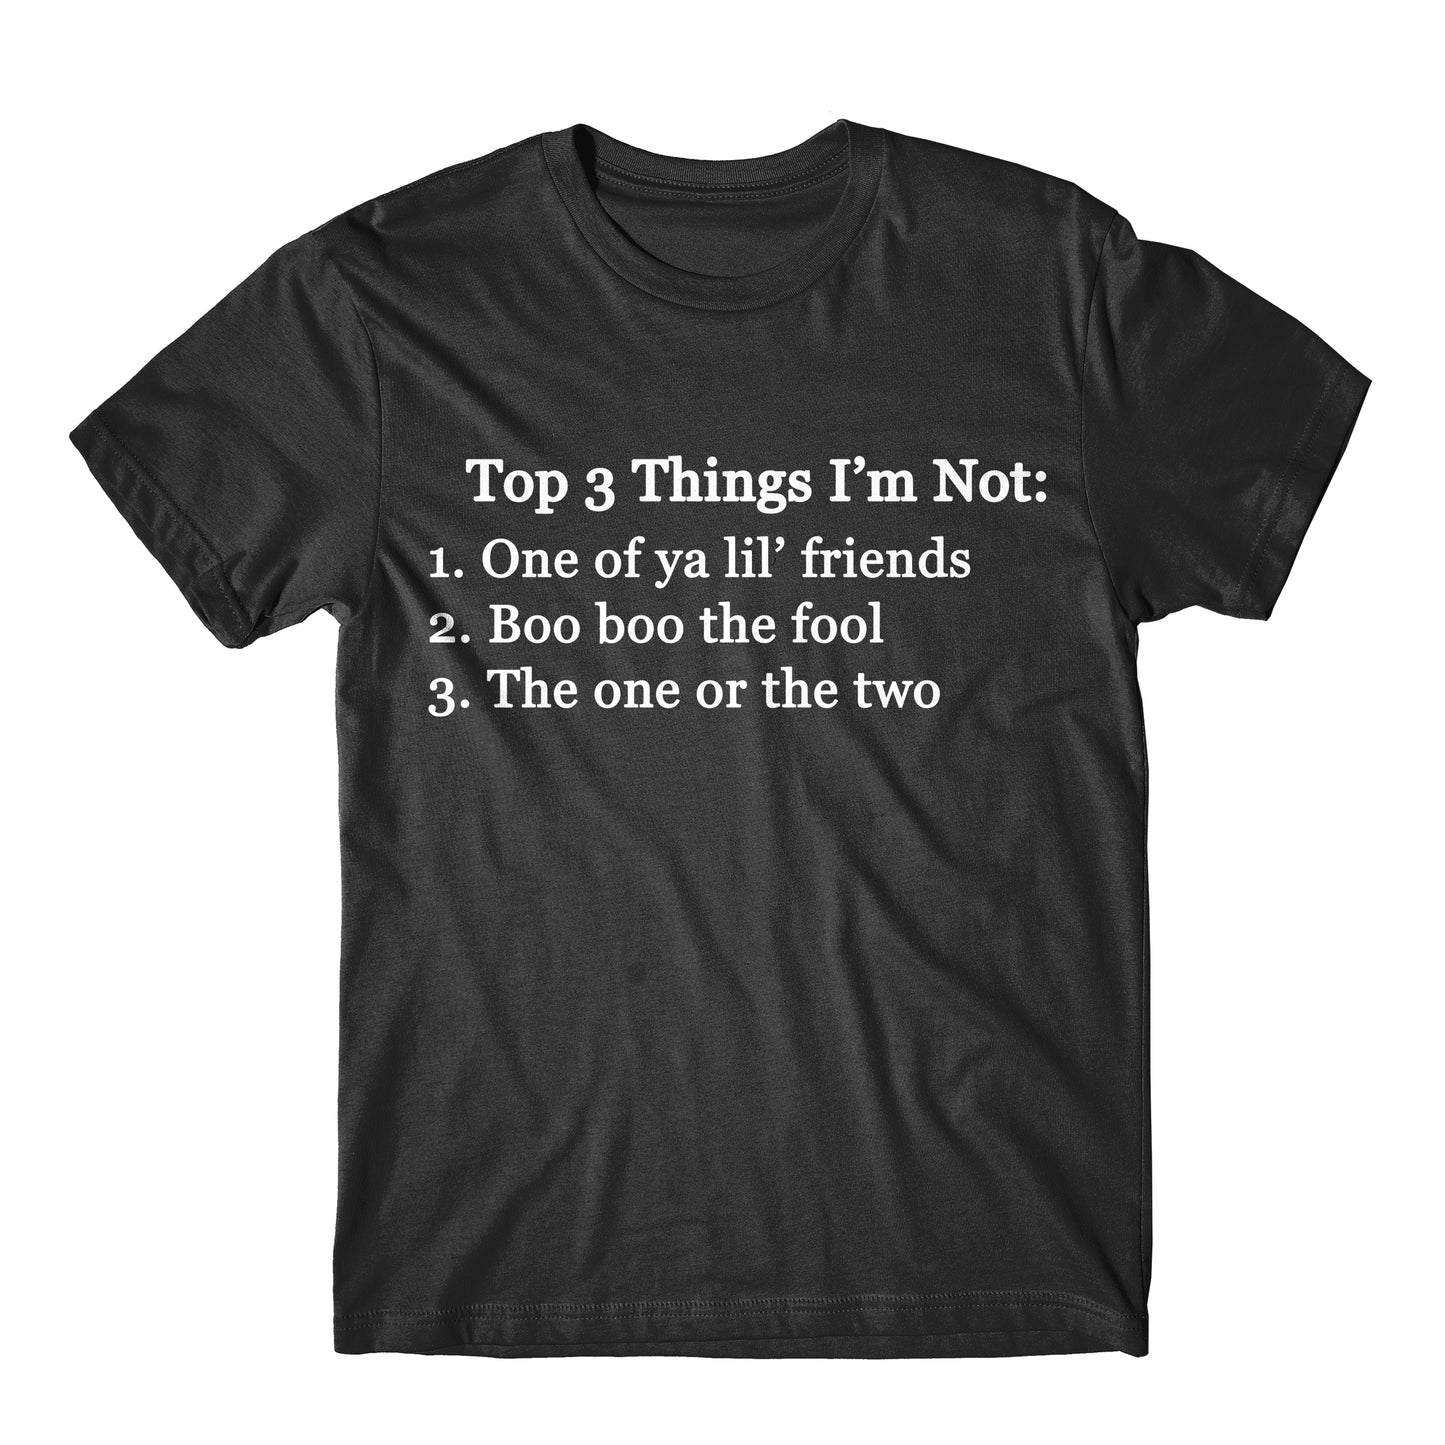 "Top 3 Things I'm Not" Tee